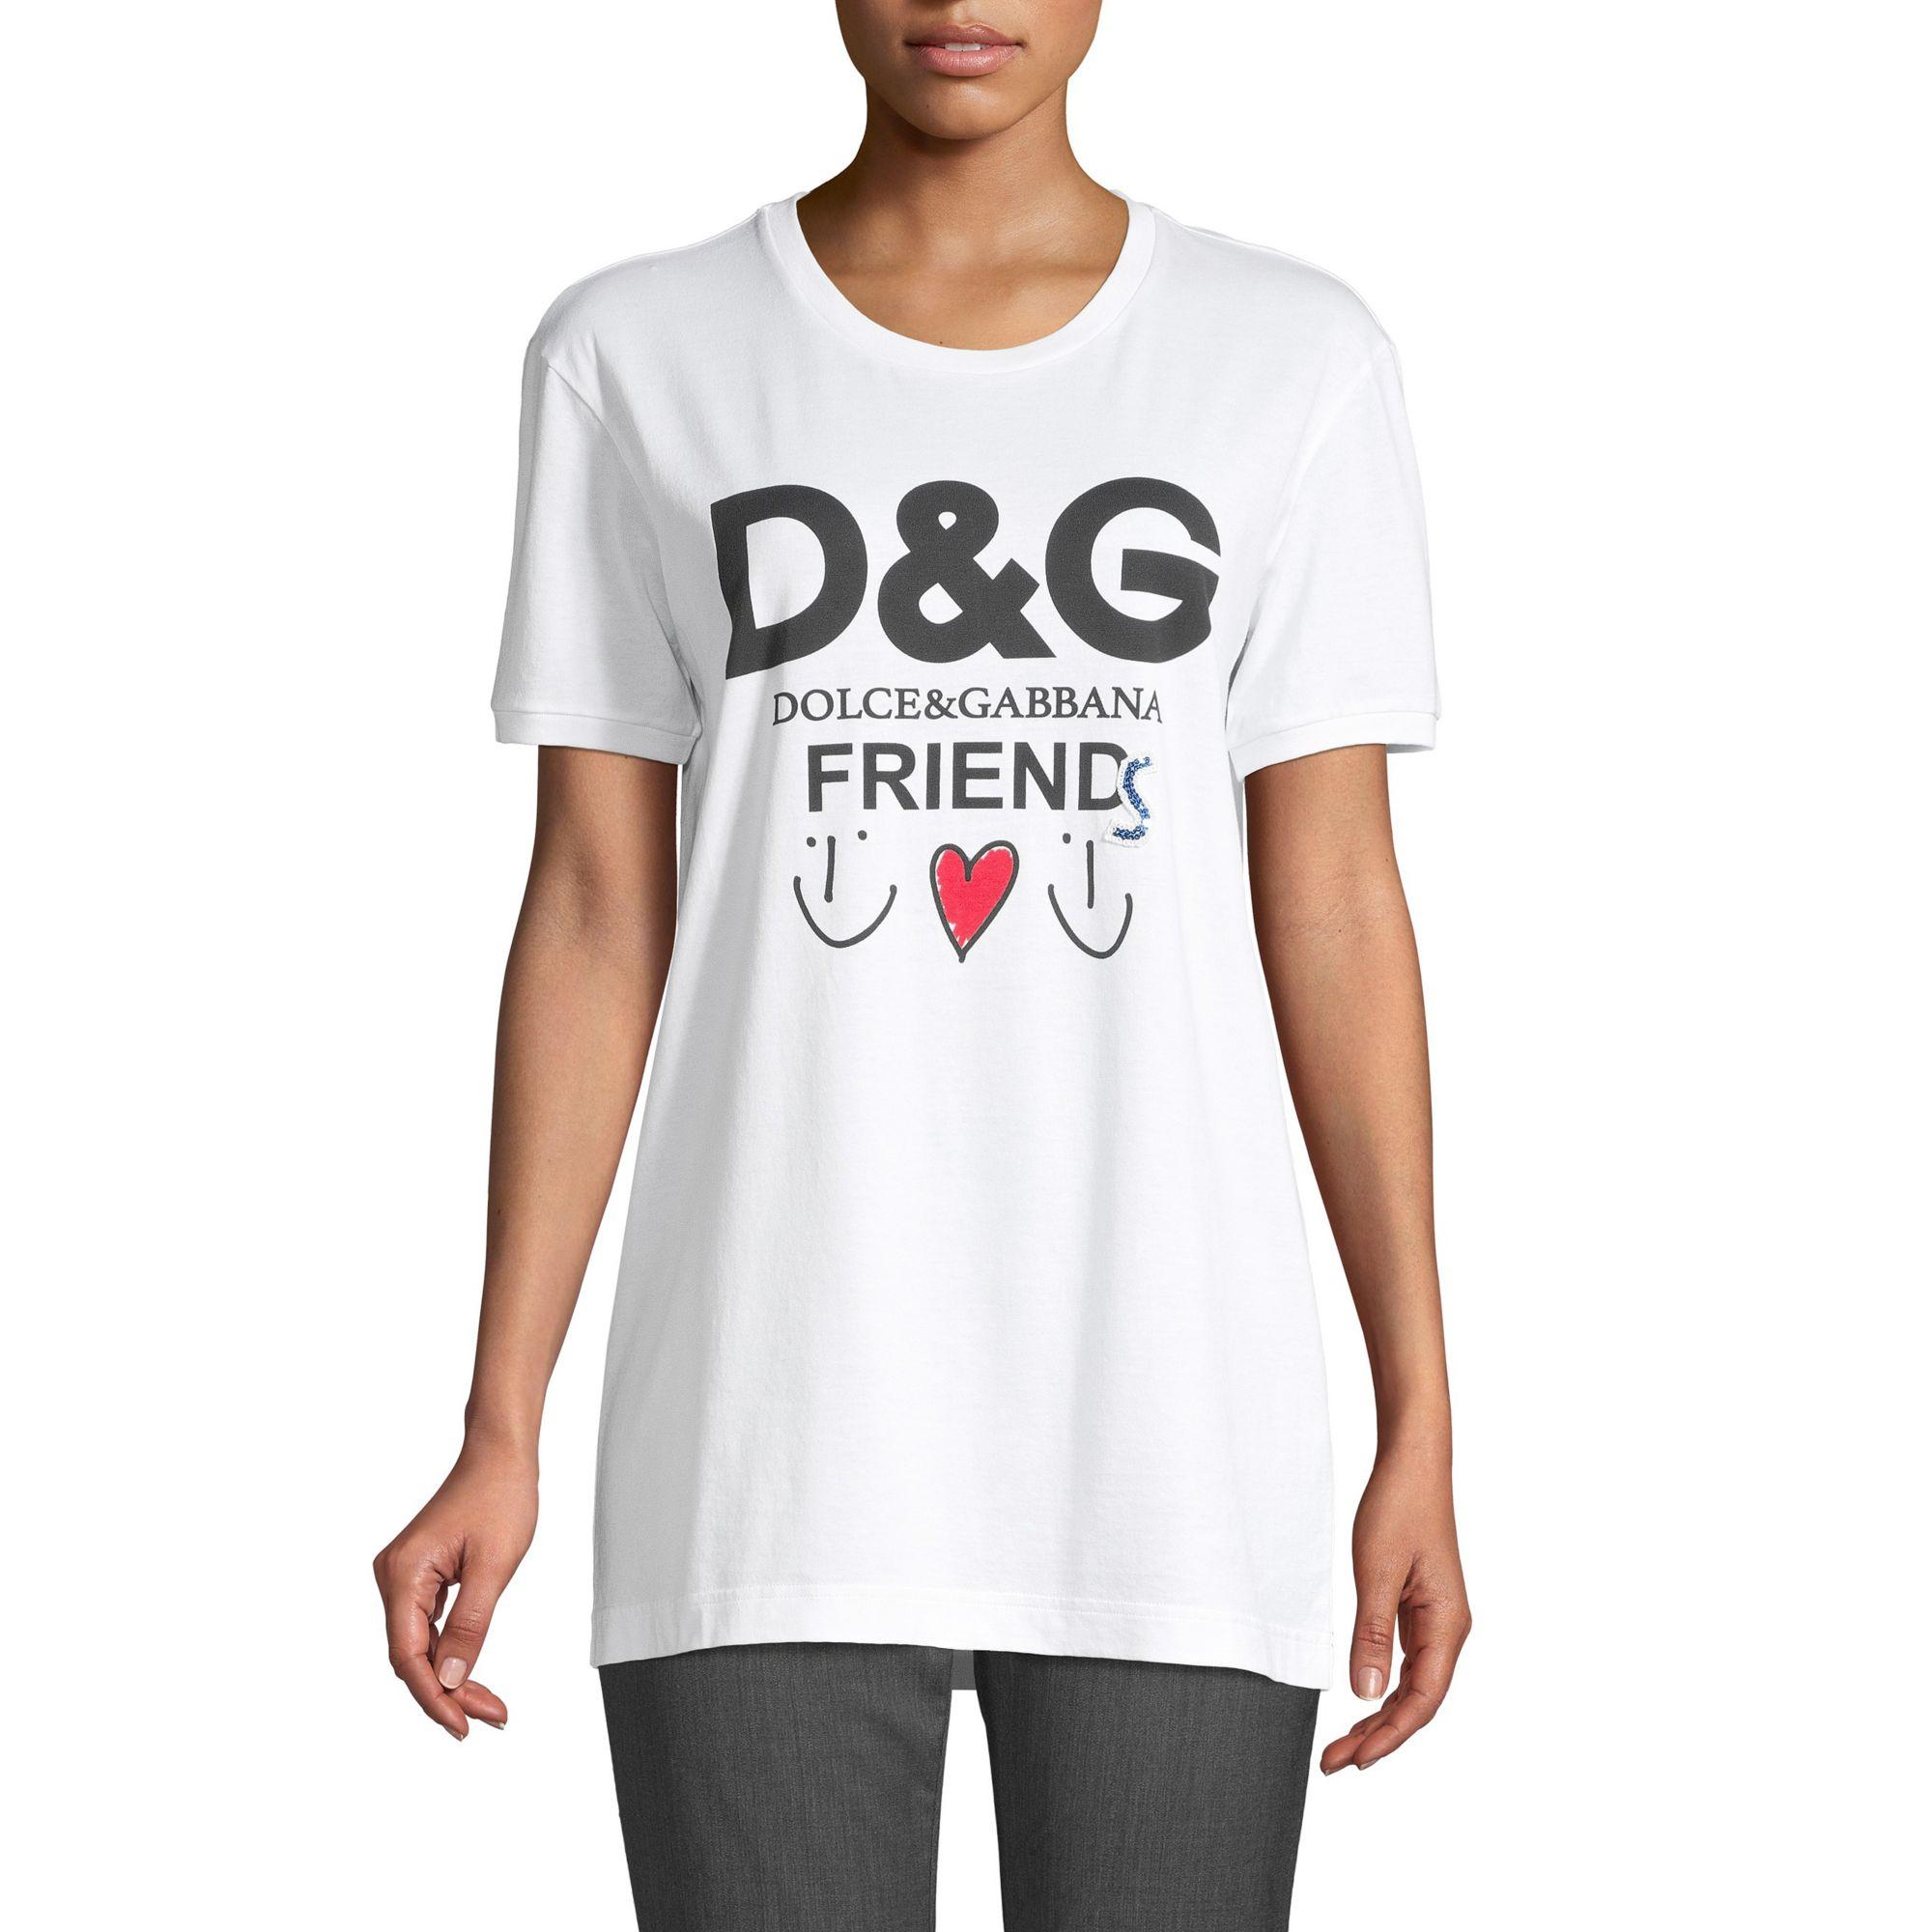 Dolce & Gabbana Cotton D & G Friends T-shirt in White - Lyst